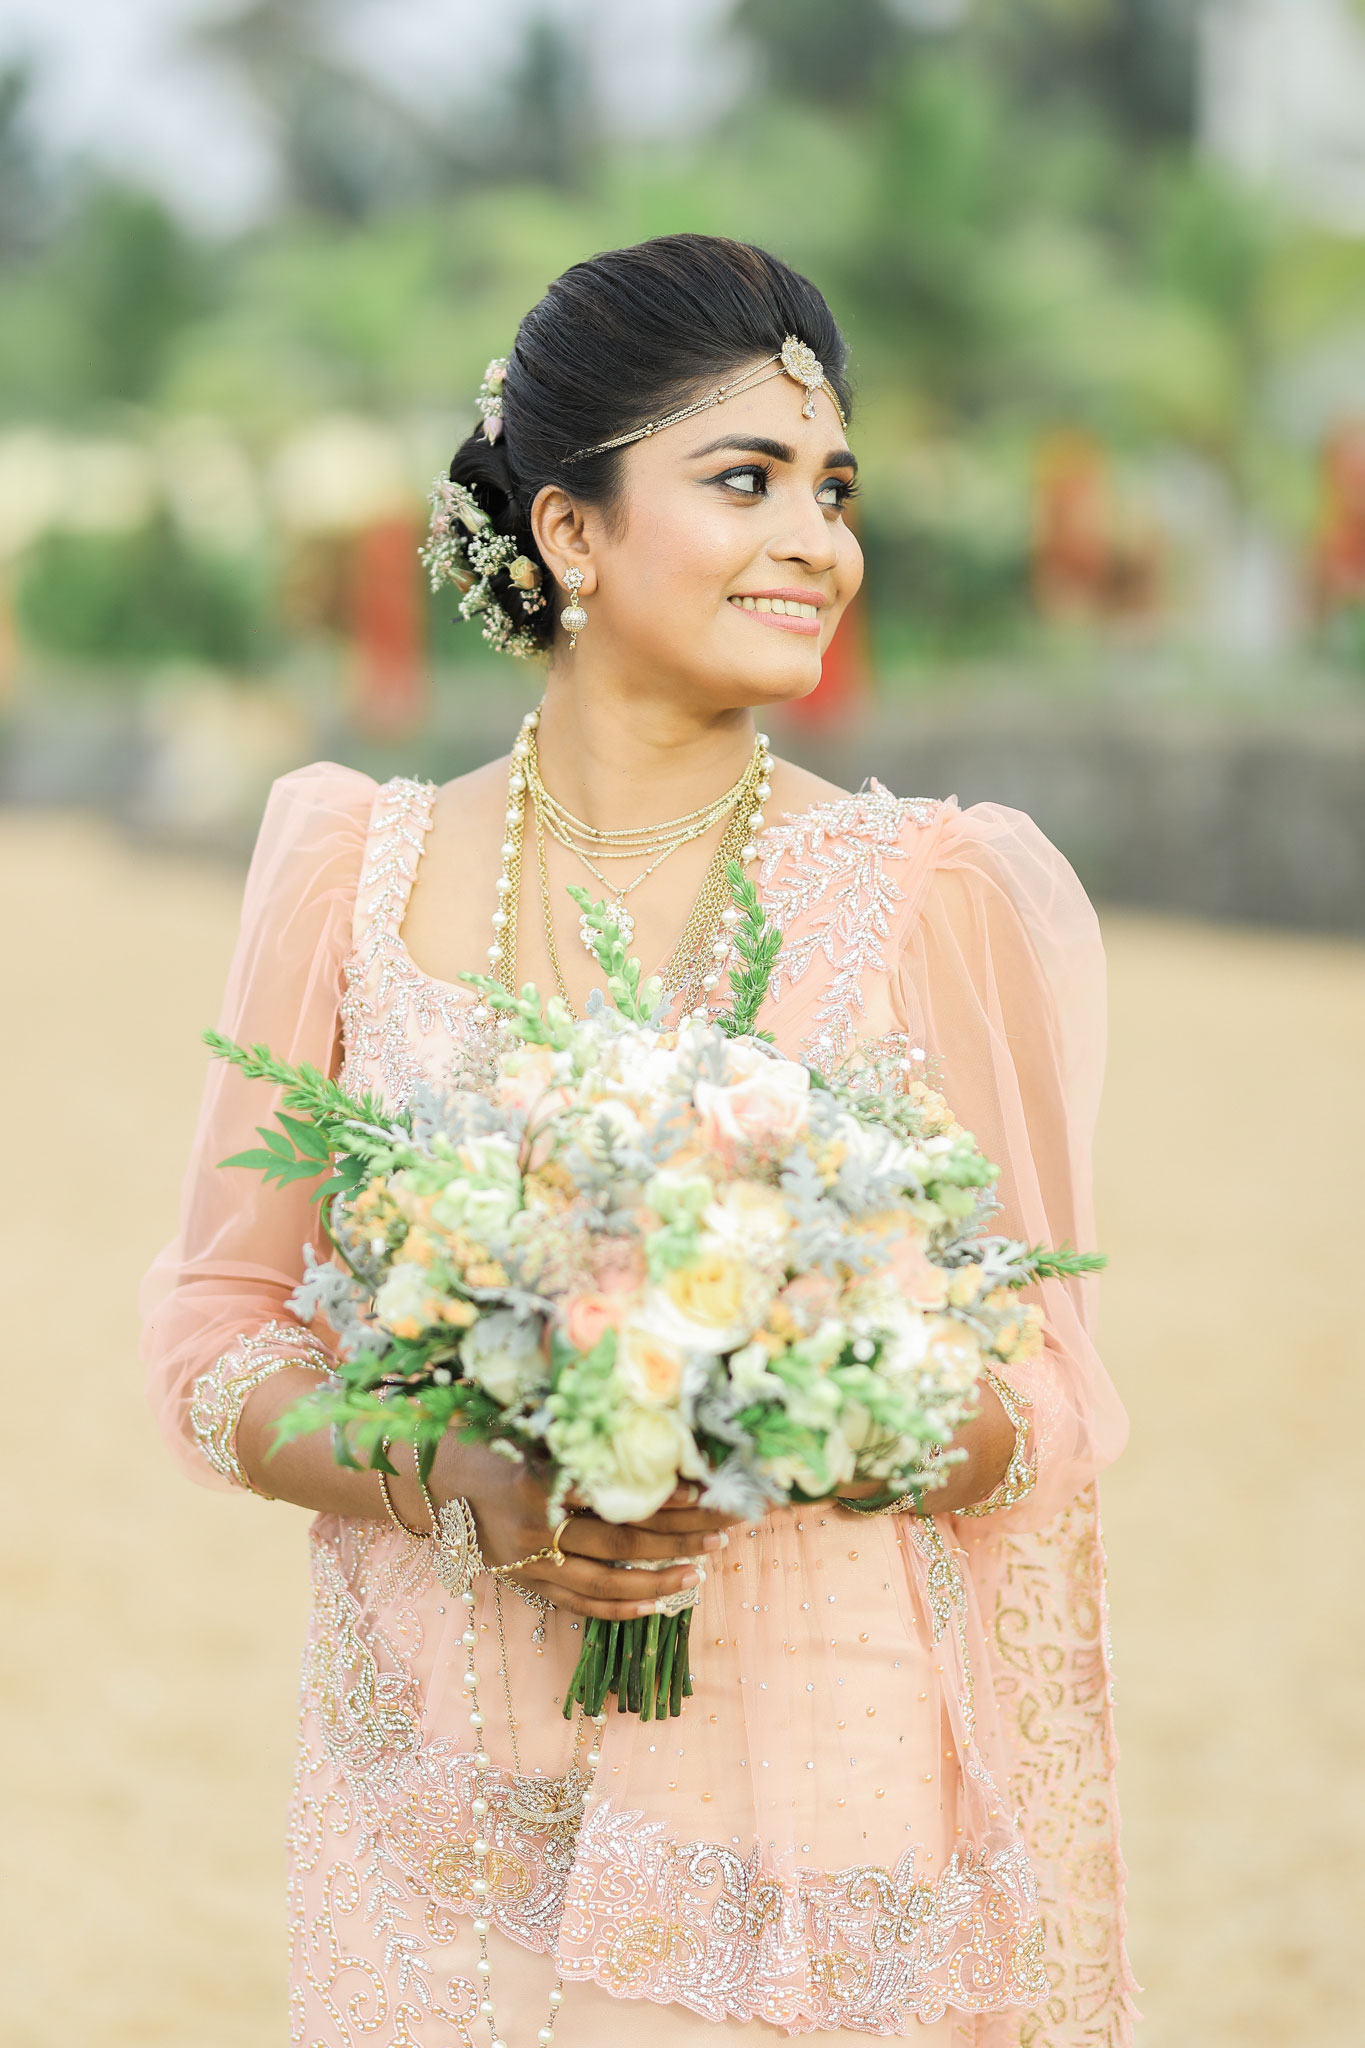 Madushani & Dasun - Prabath Kanishka Wedding Photography